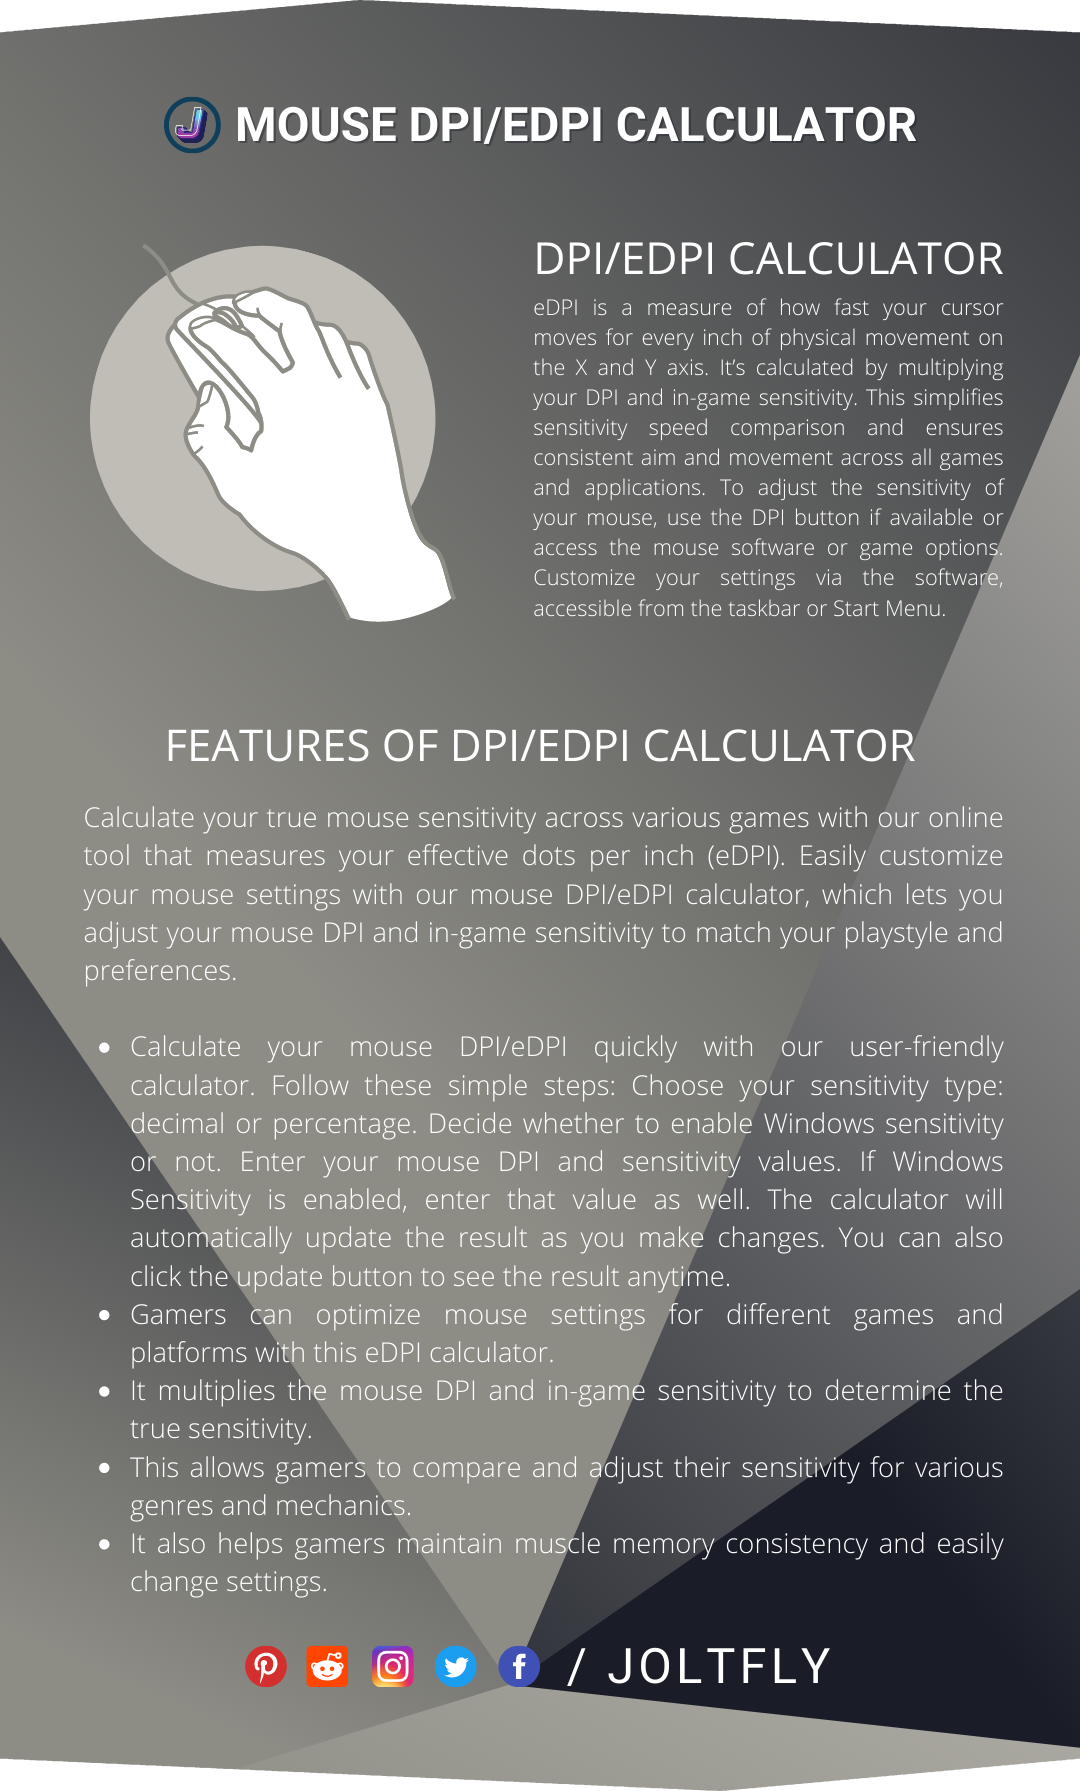 Mouse DPIeDPI Calculator-Features